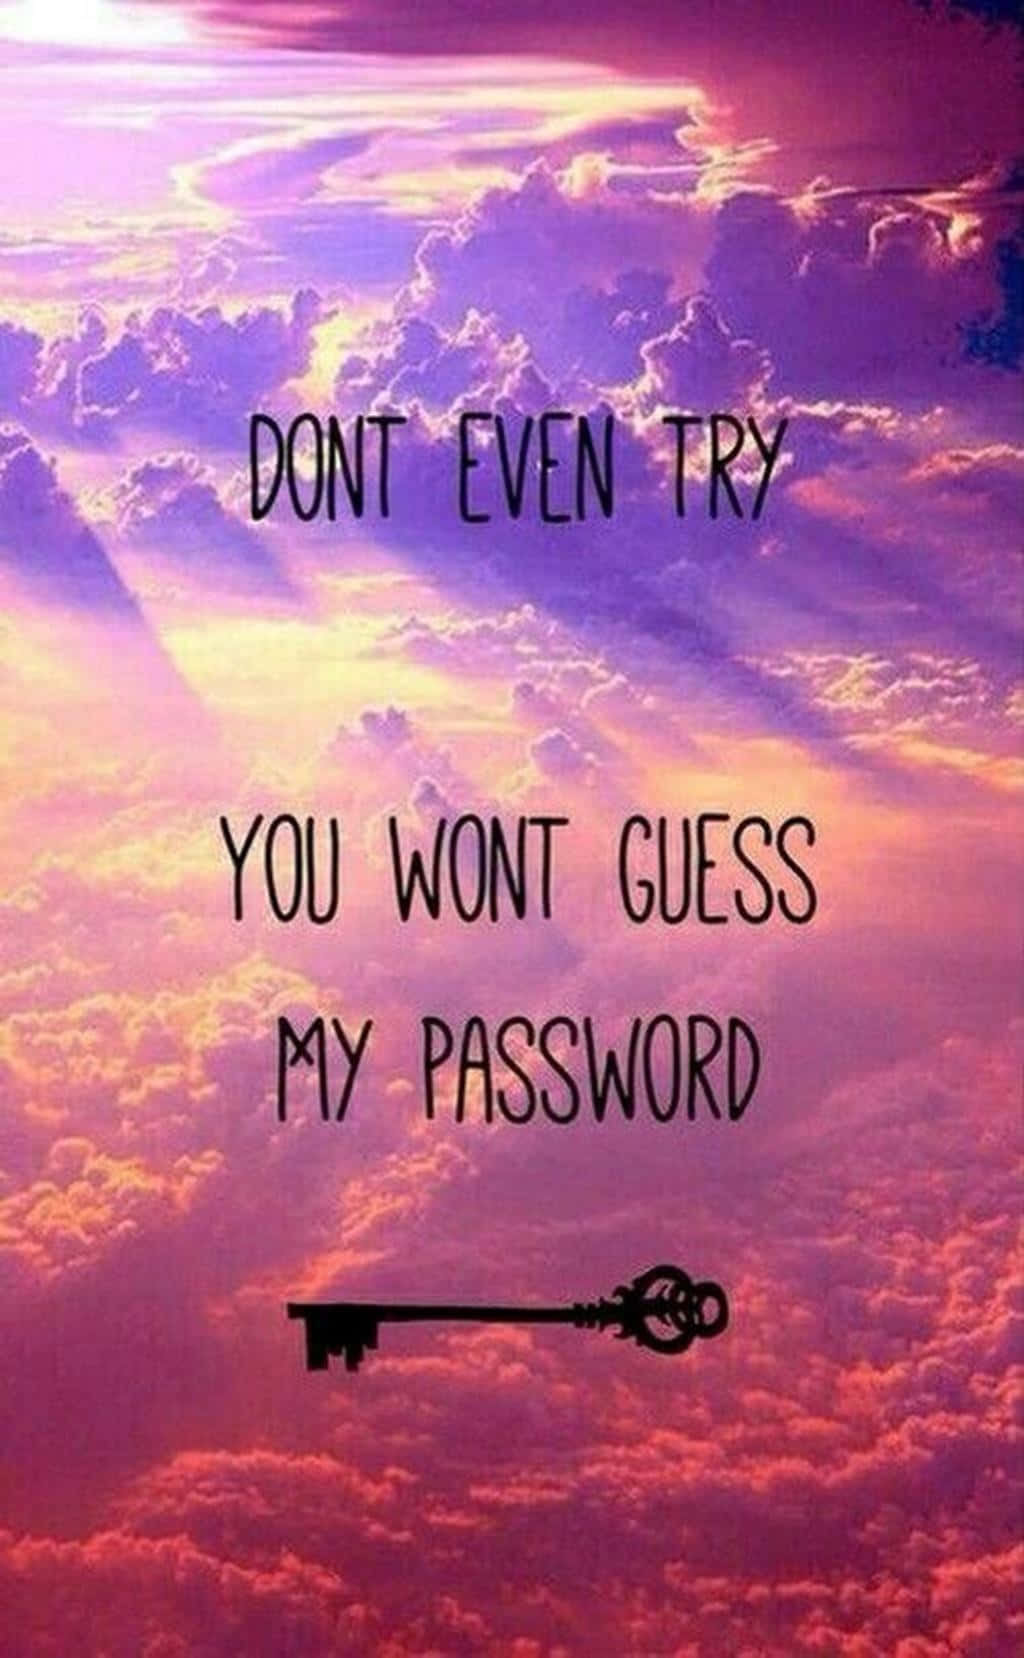 Secure Password Challenge Meme Wallpaper